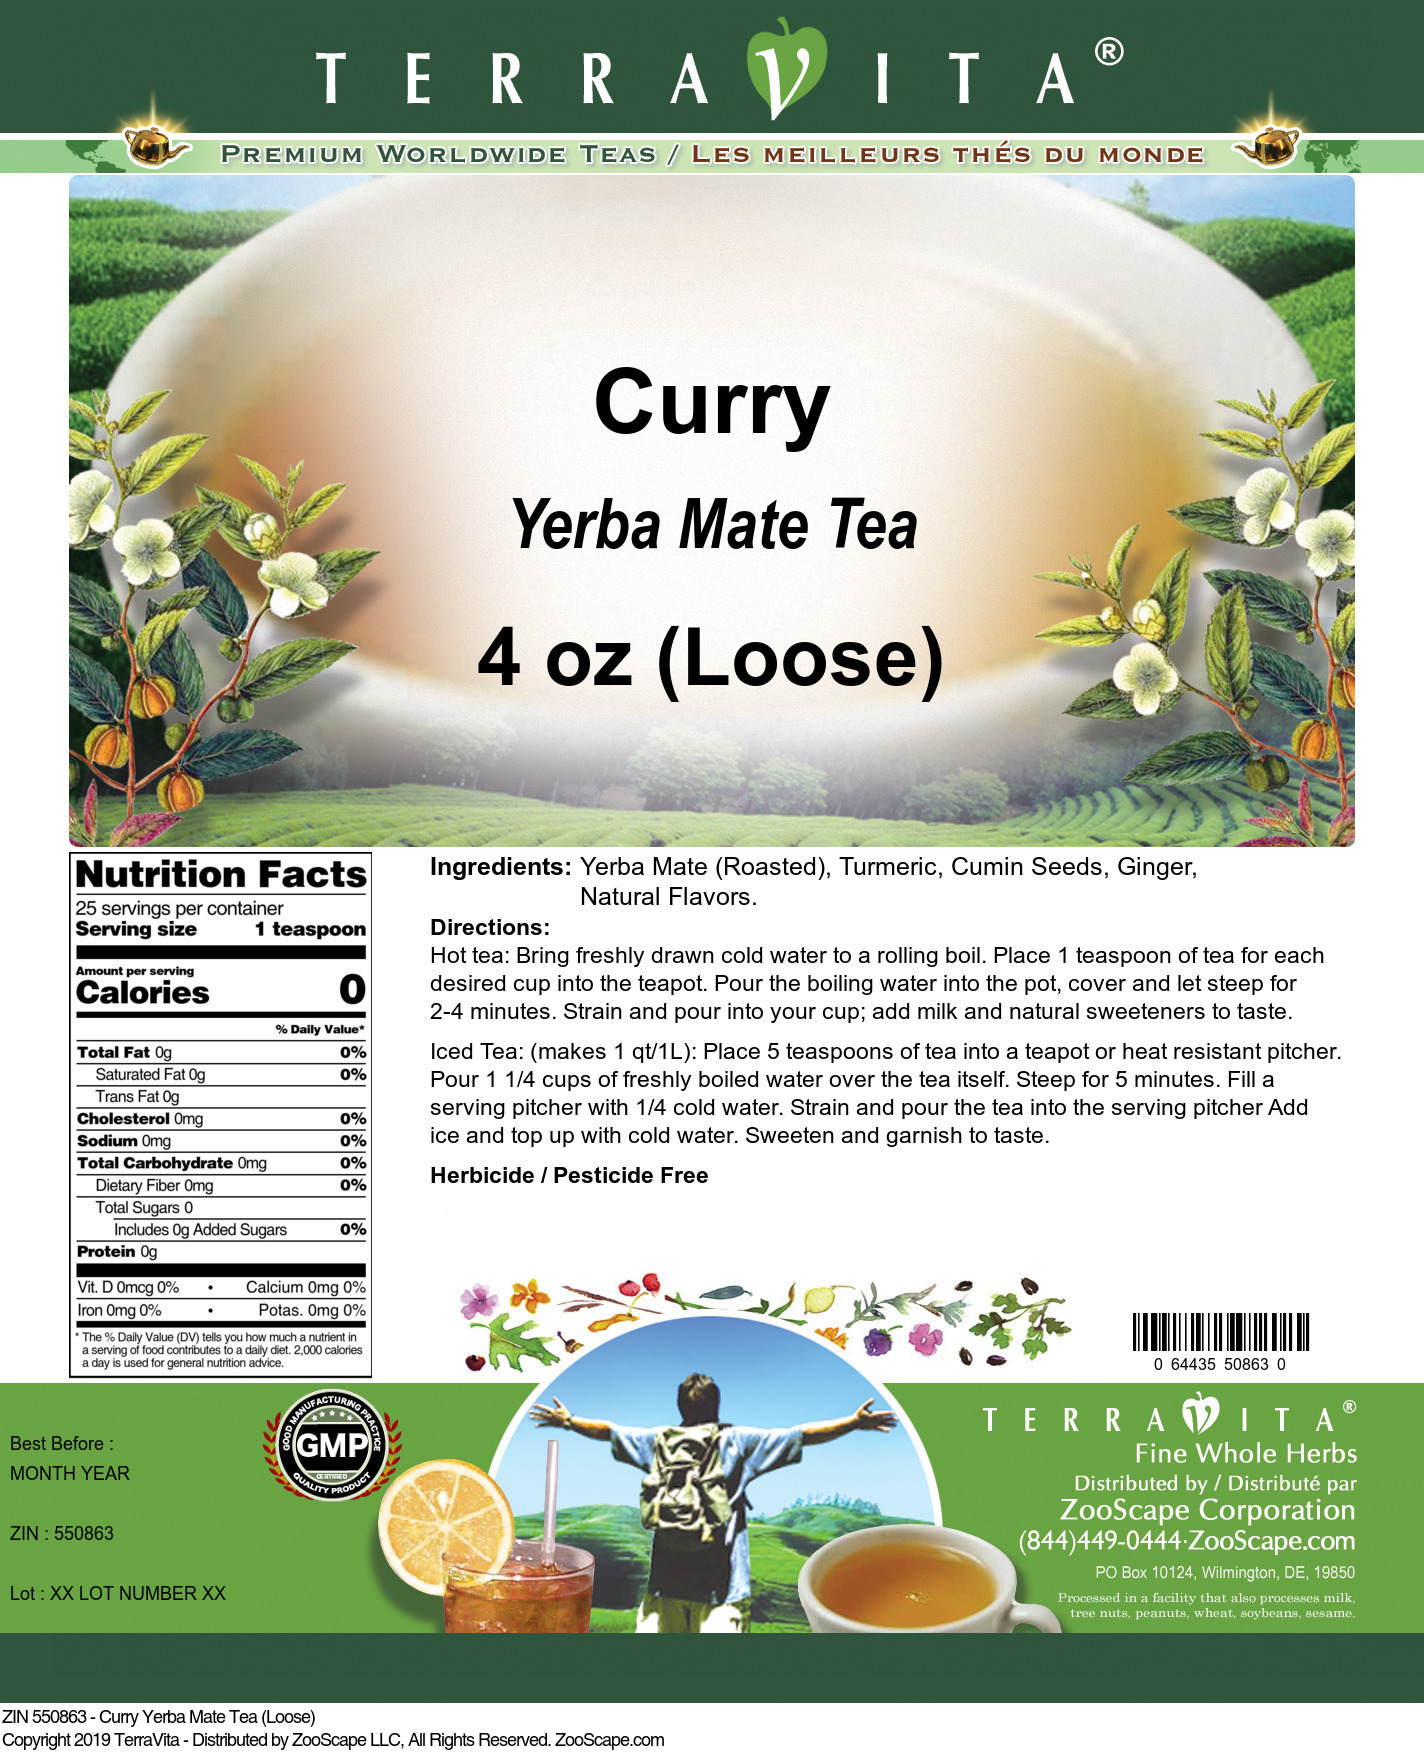 Curry Yerba Mate Tea (Loose) - Label